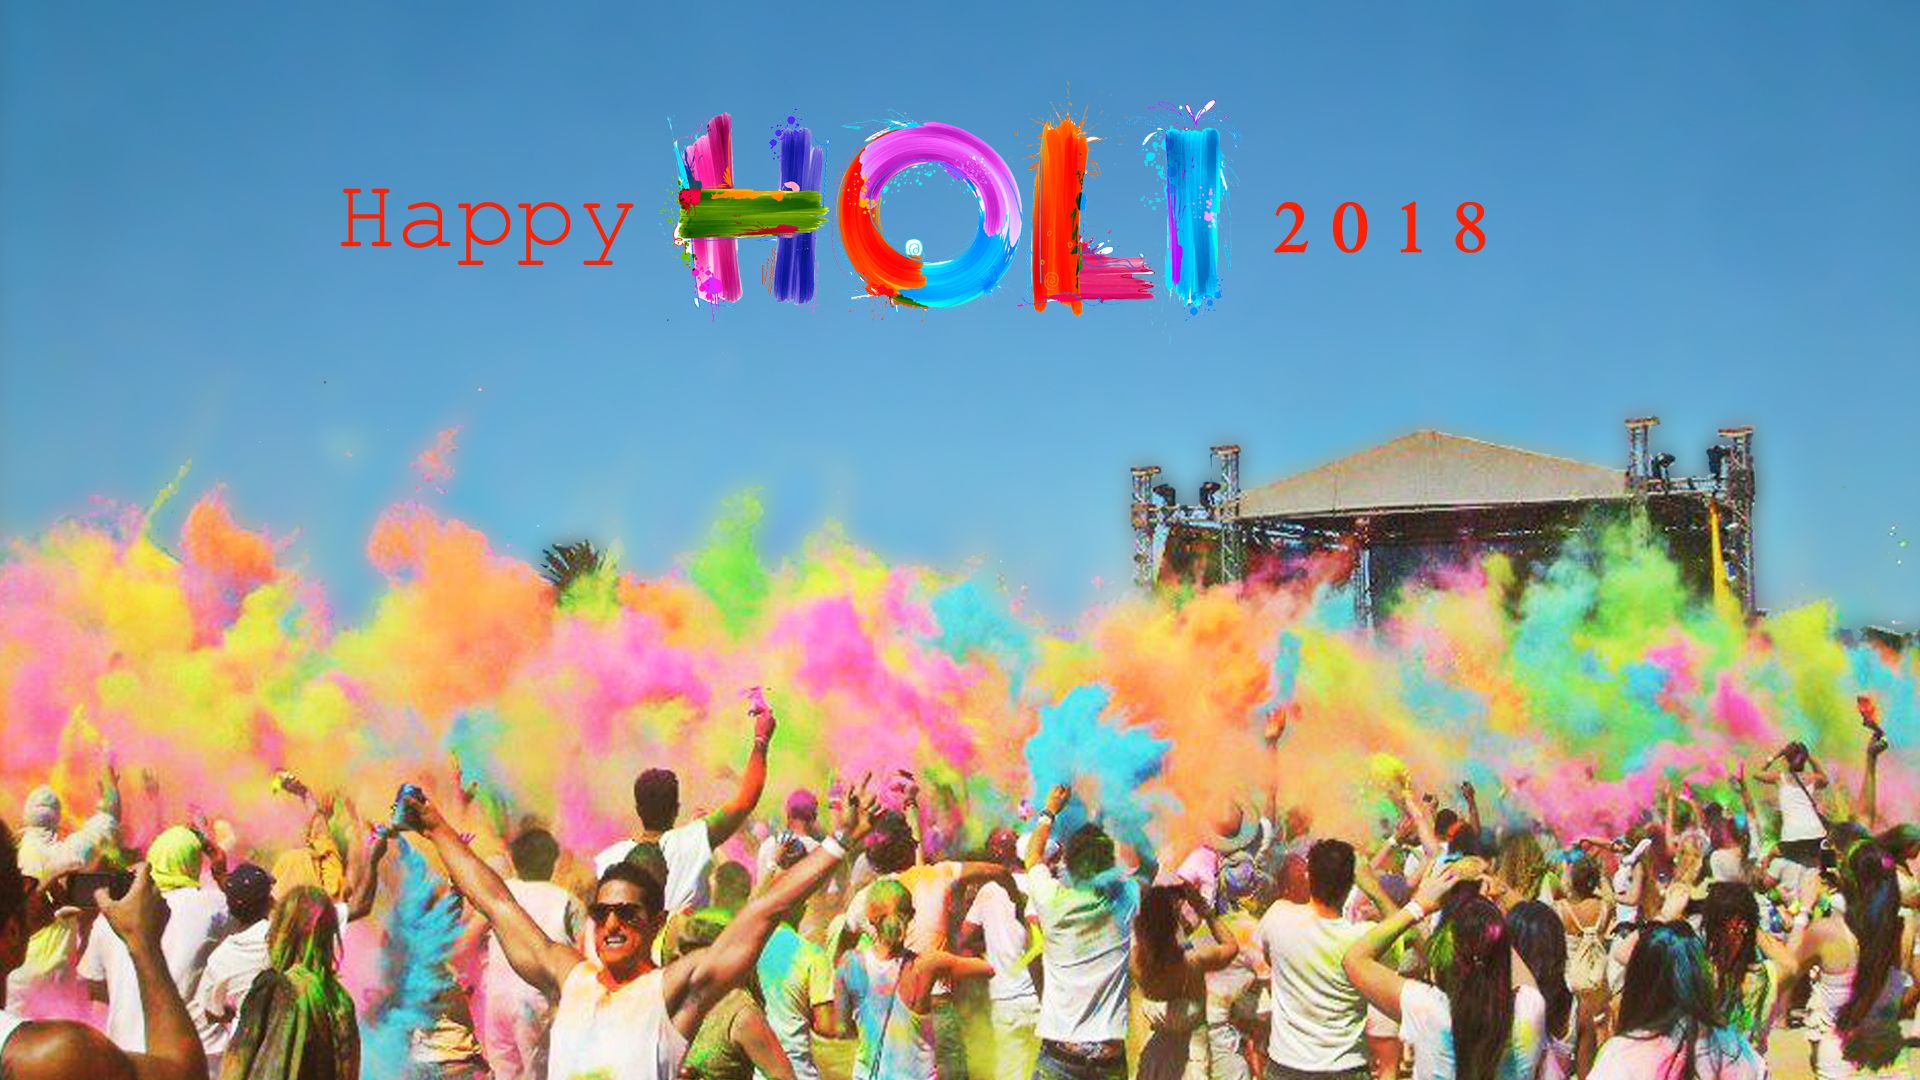 Holi Festival 2018 Wallpaper in HD Wallpaper. Wallpaper Download. High Resolution Wallpaper